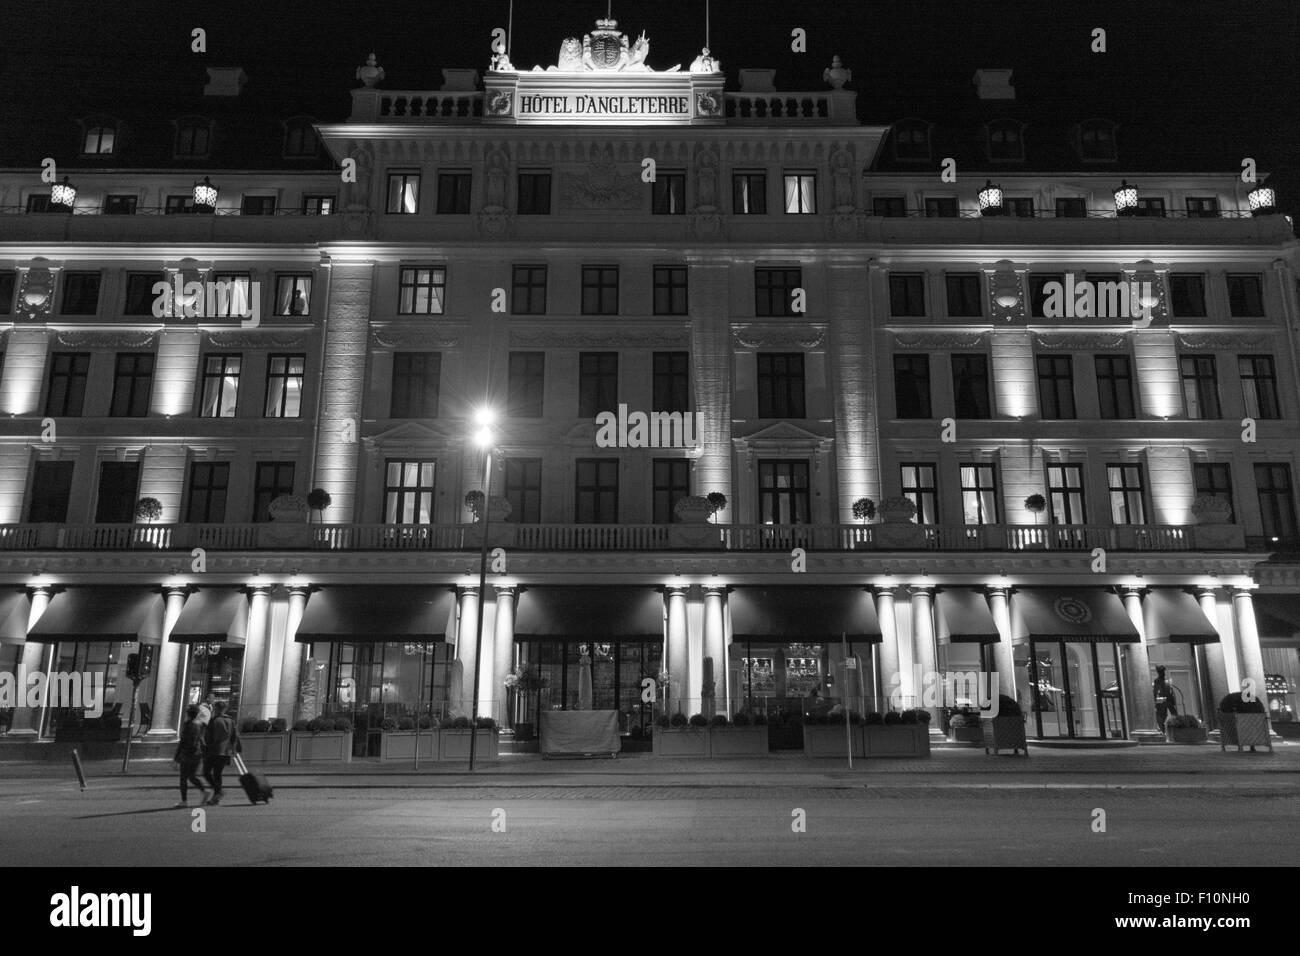 El Hotel d'Angleterre, el histórico hotel de lujo, Kongens Nytorv o King's Square, Copenhague, Dinamarca, Escandinavia, Europa Foto de stock